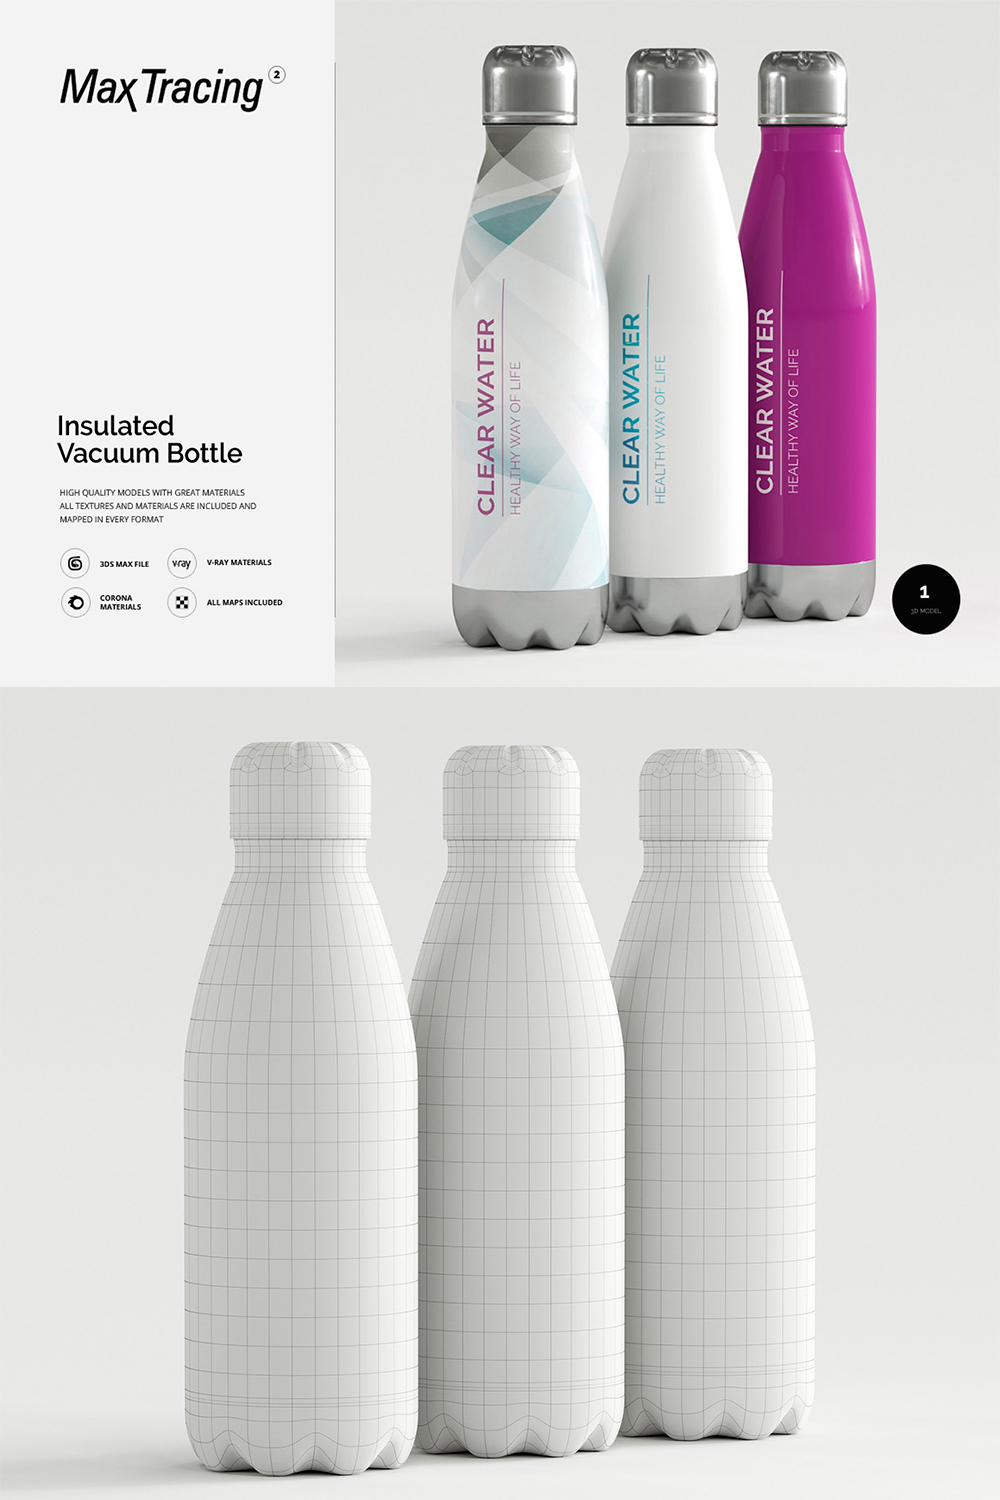 A set of images of an enchanting 3d model of bottles